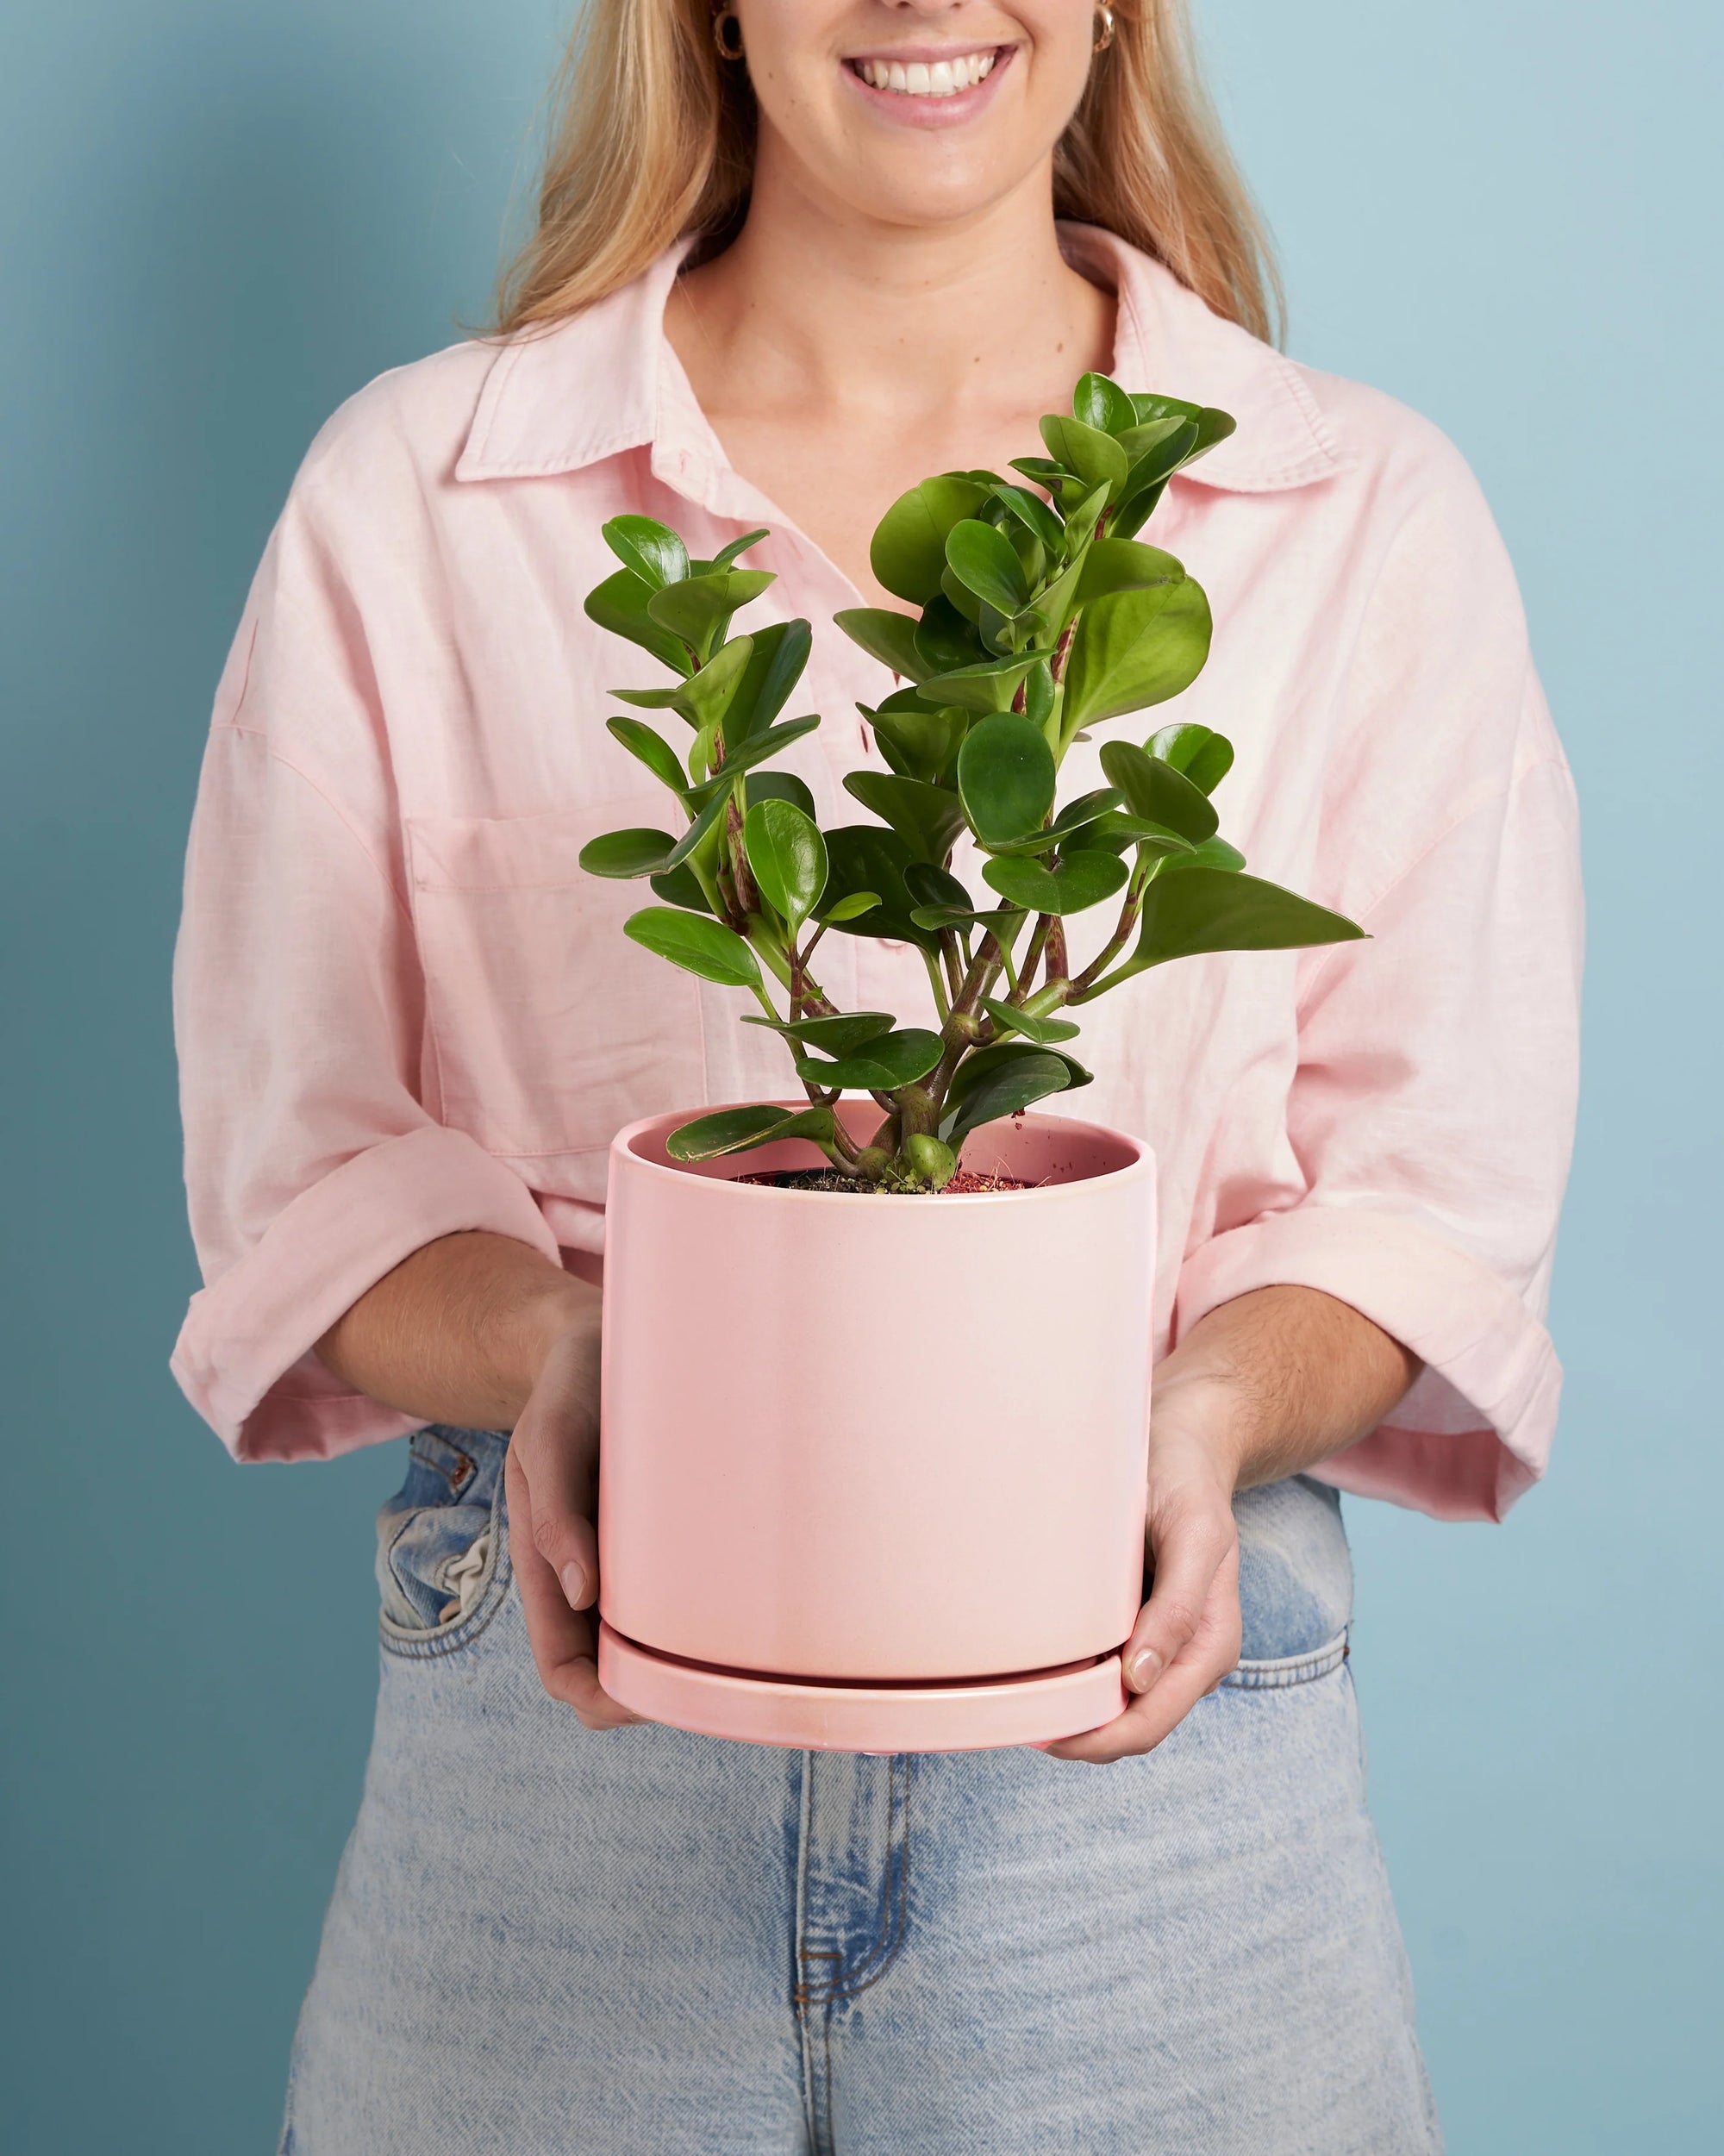 Plant + Dusty Pink Pot